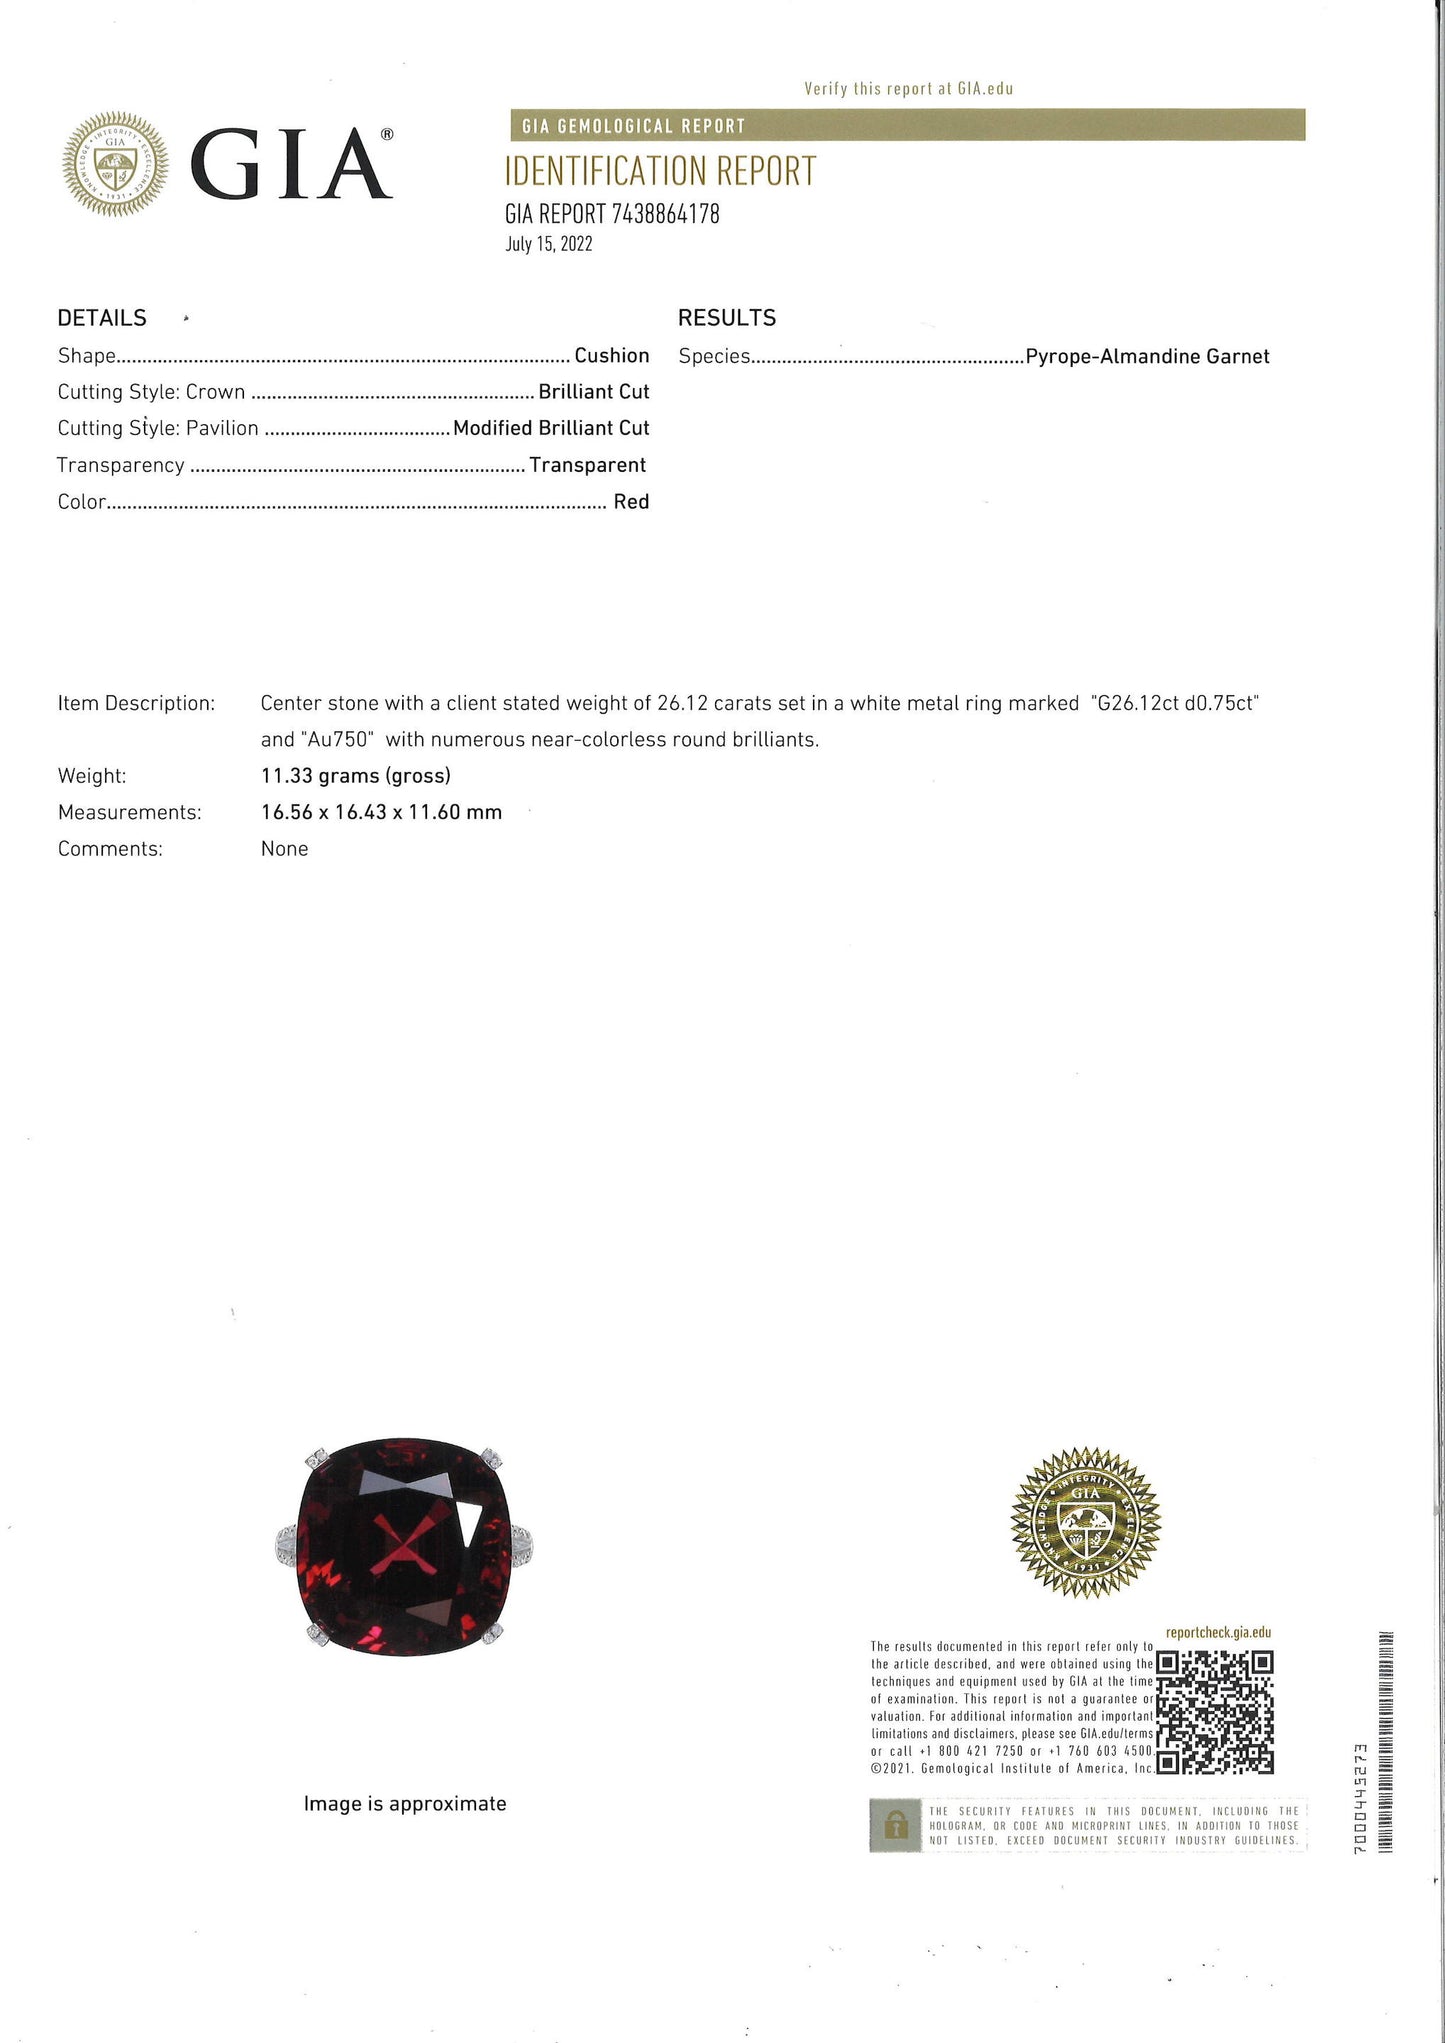 GIA Certified Pyrope-AlmandIne Garnet 26.12 Carat Ring With Diamonds 18K Gold